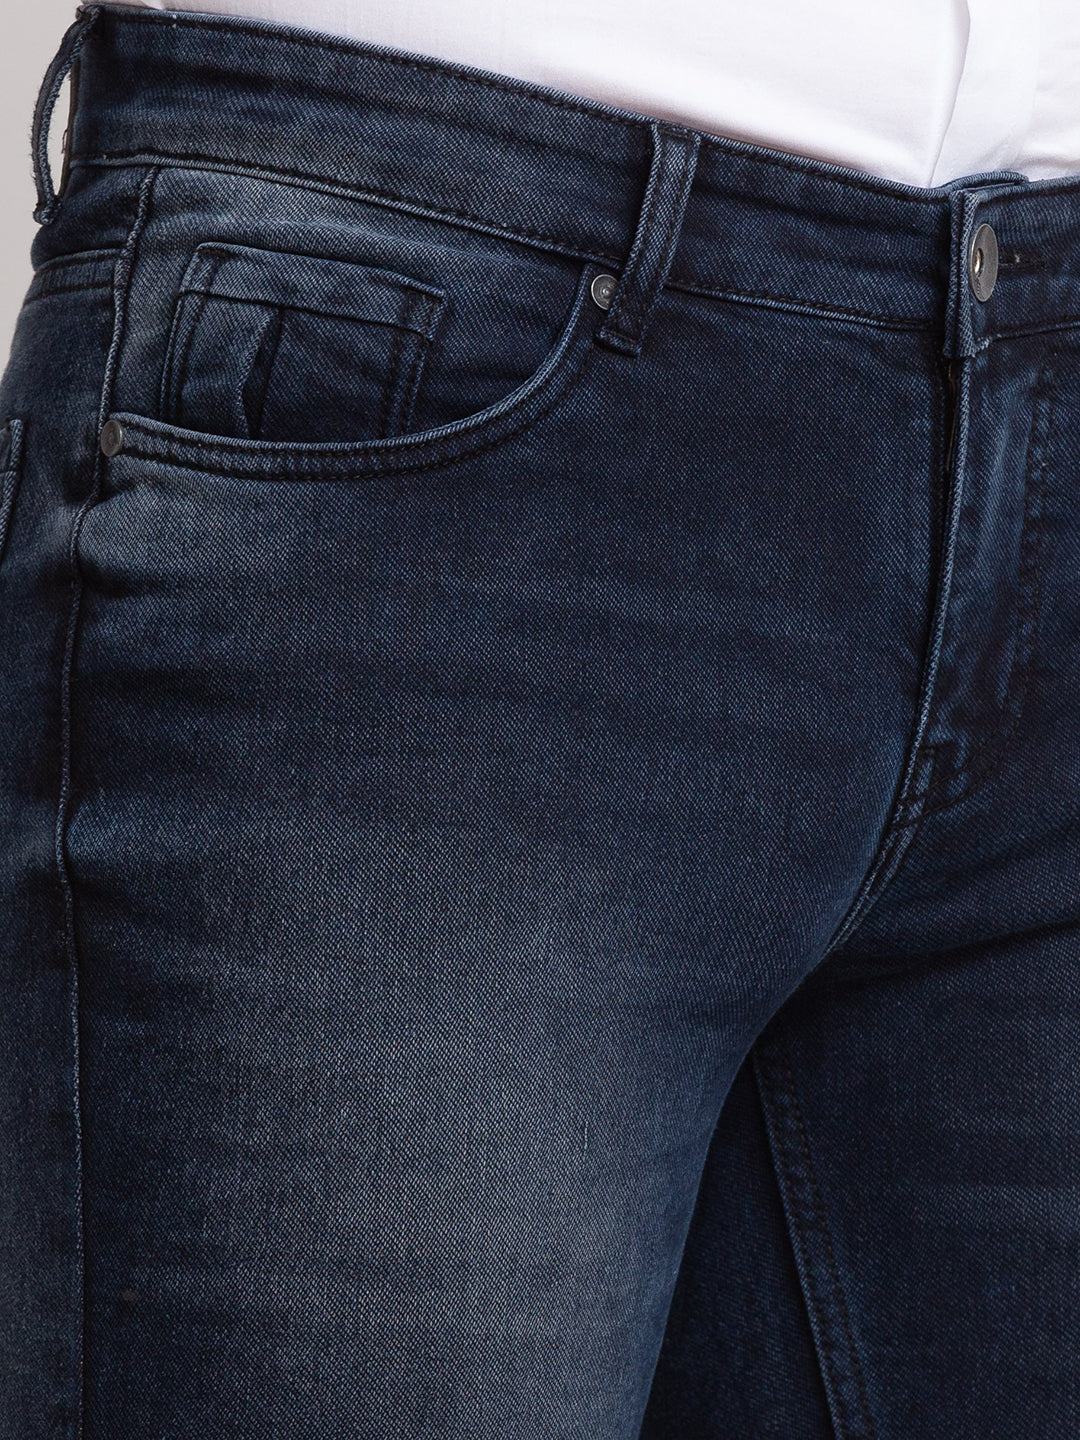 Dark Blue Clean Look Bootcut Jeans for Men